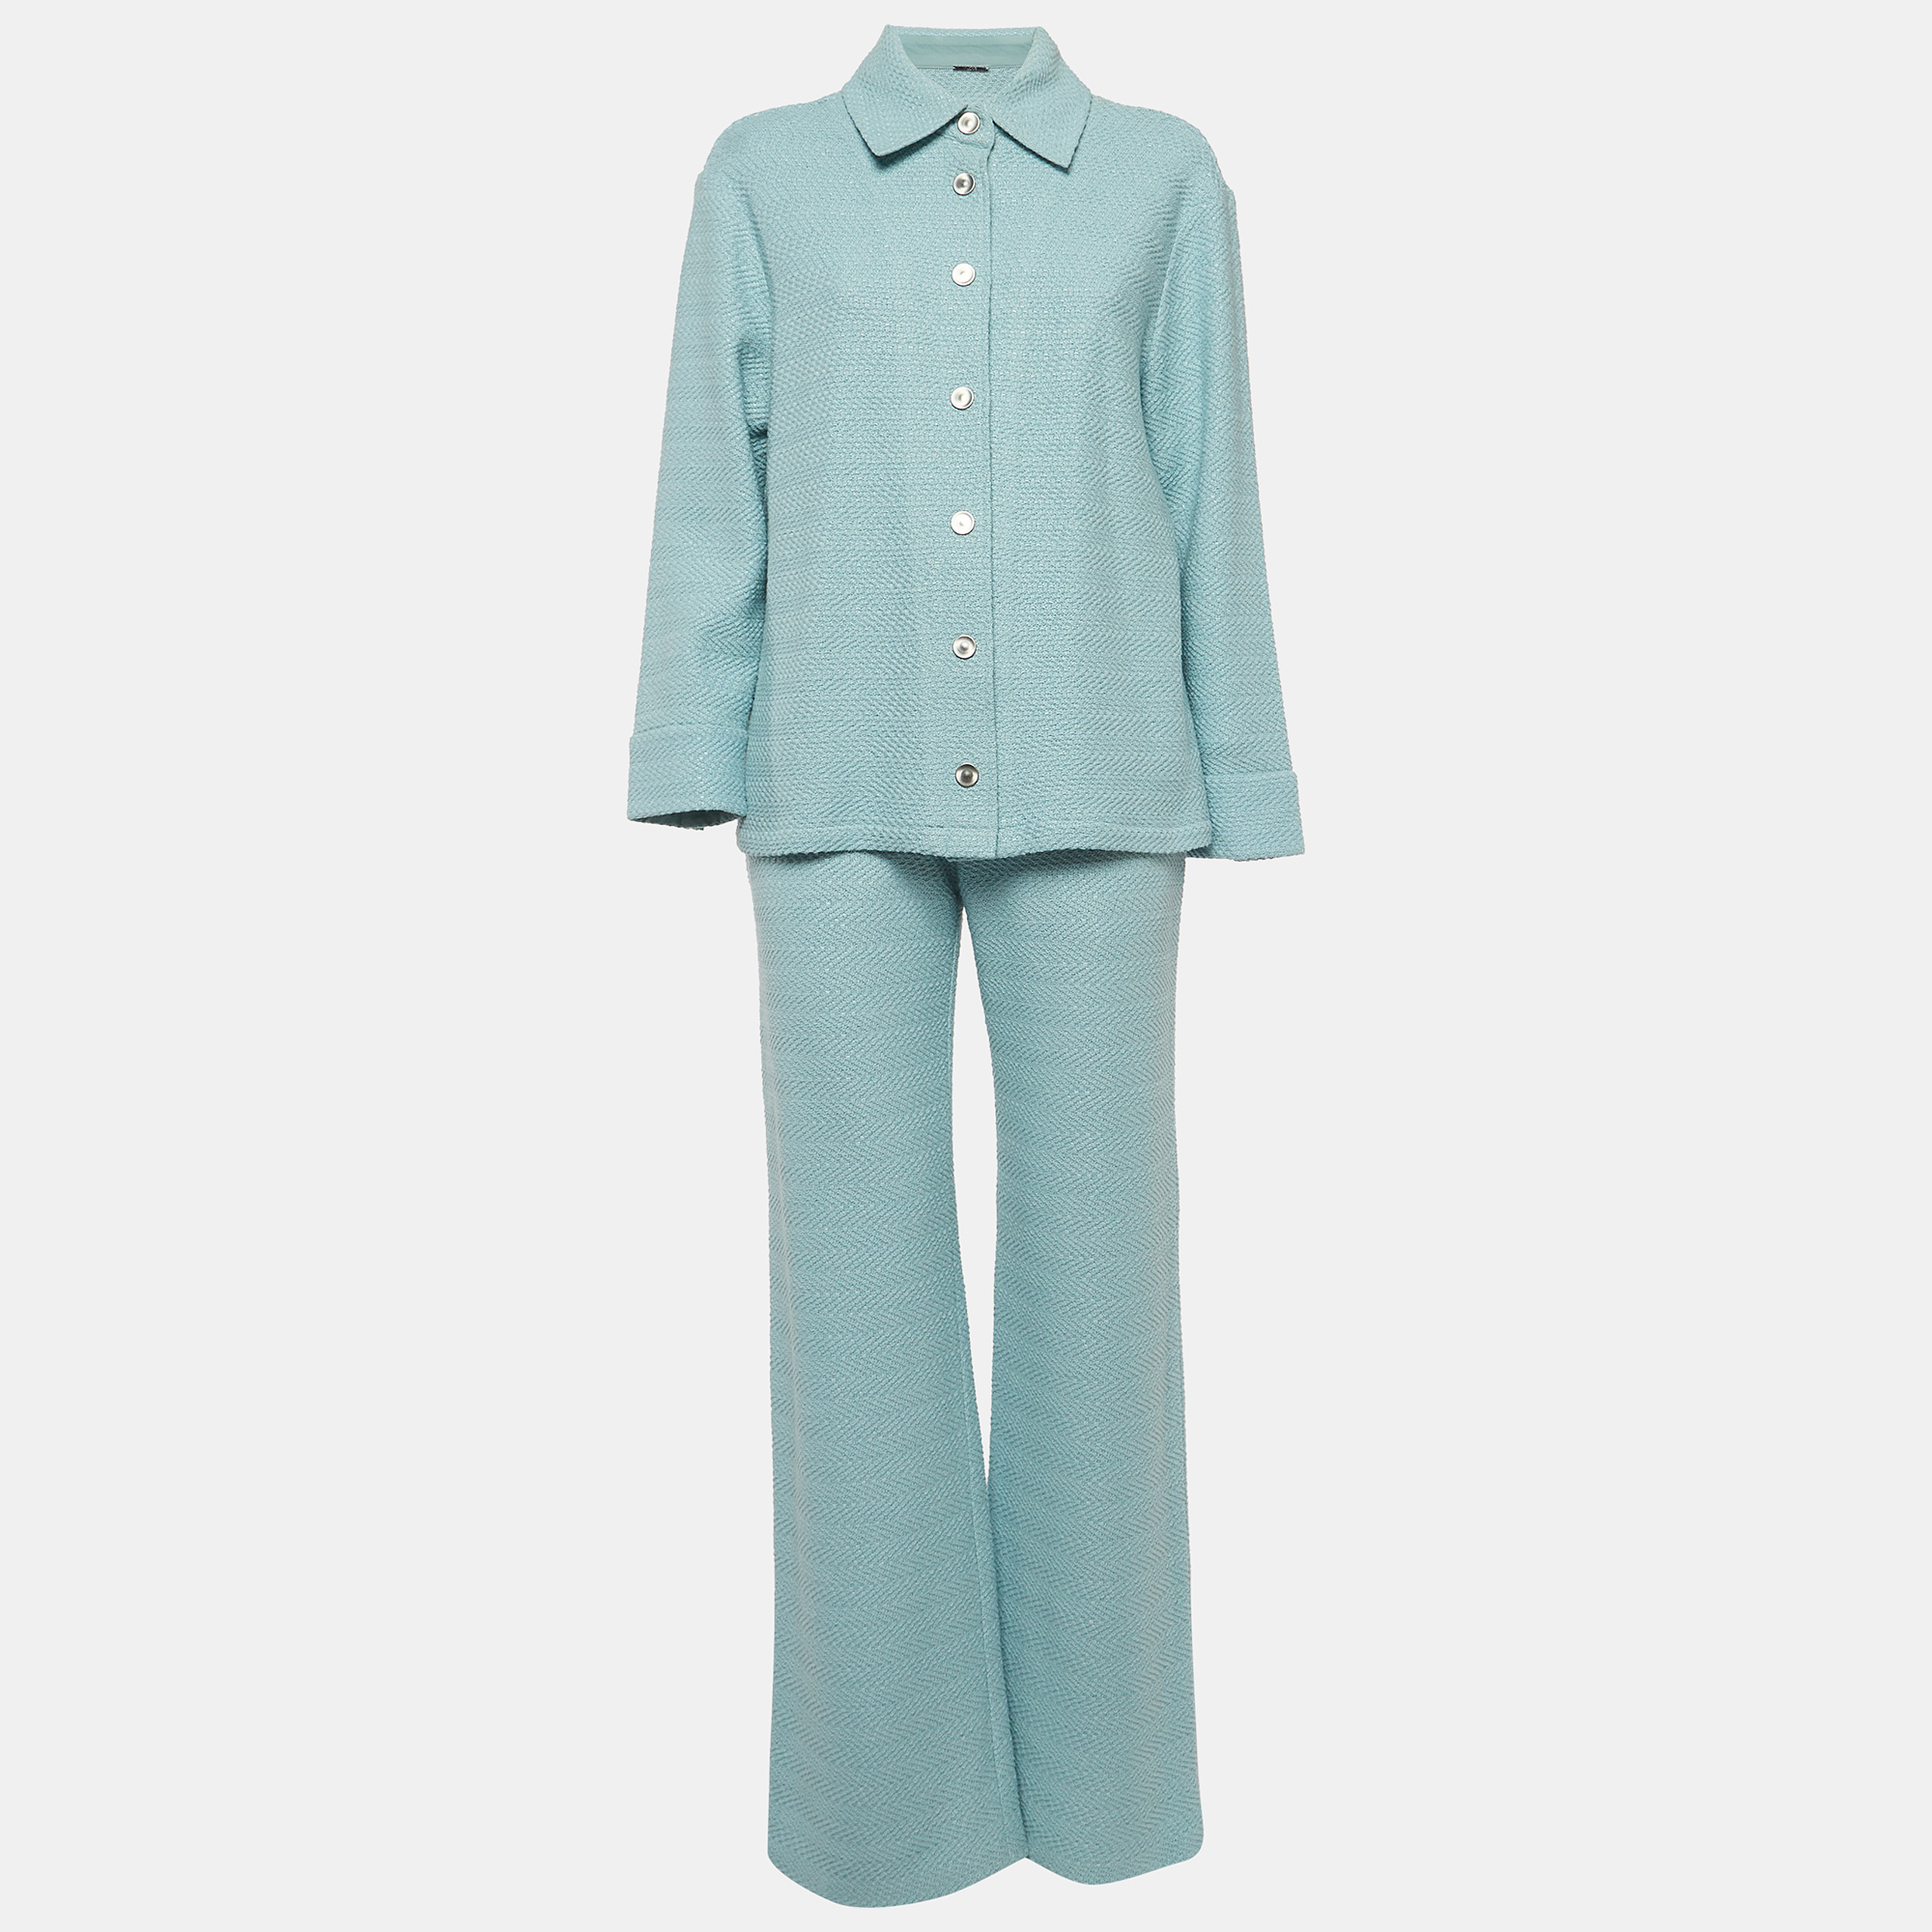 Alexis blue cotton crochet shirt and kiana pants set m/s